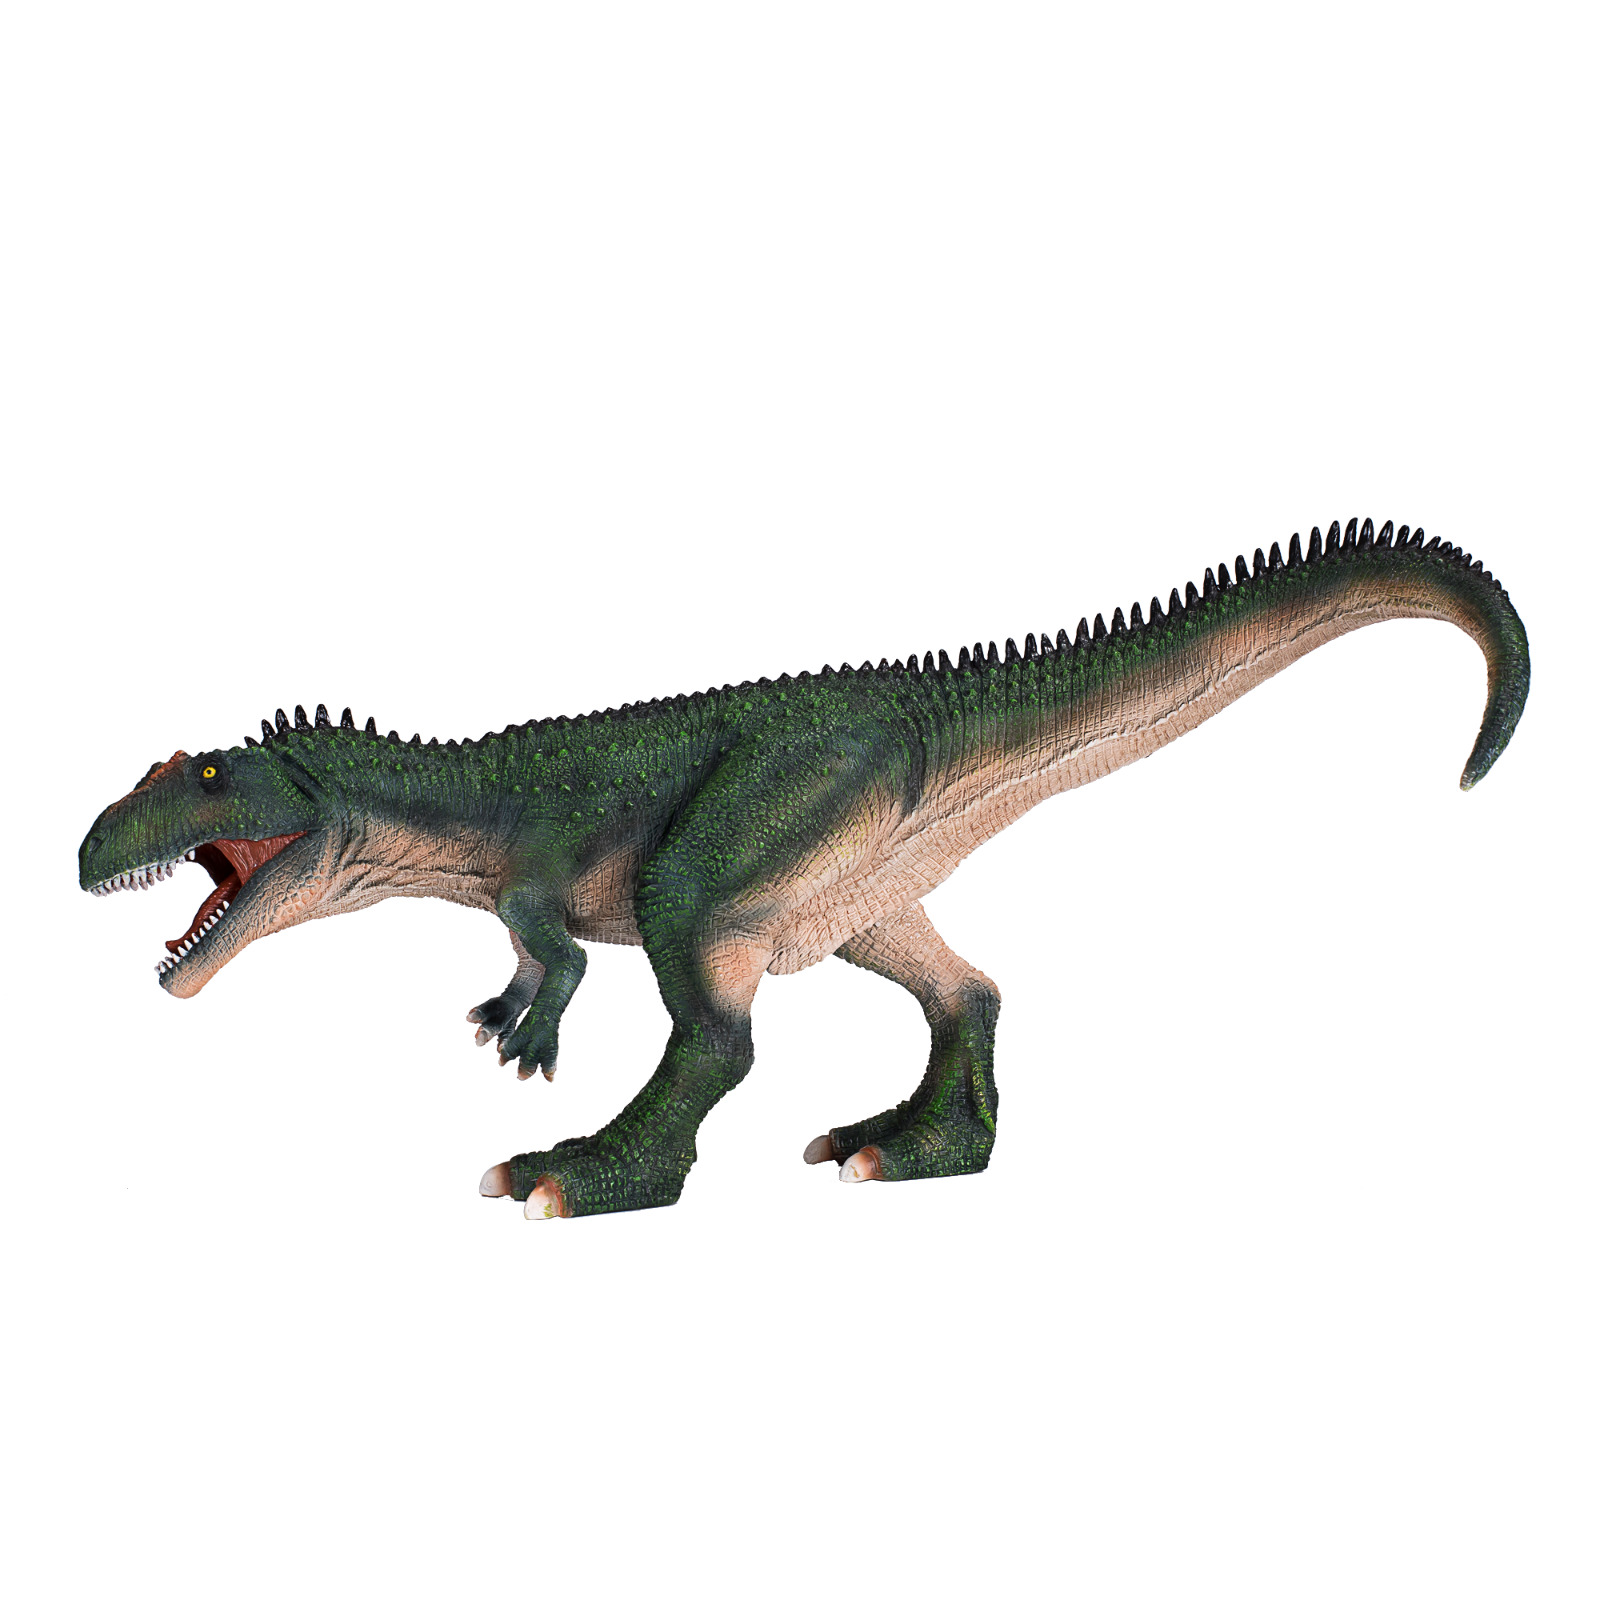 Mojo GIGANOTOSAURUS DINOSAUR model figure toy Jurassic prehistoric figurine gift